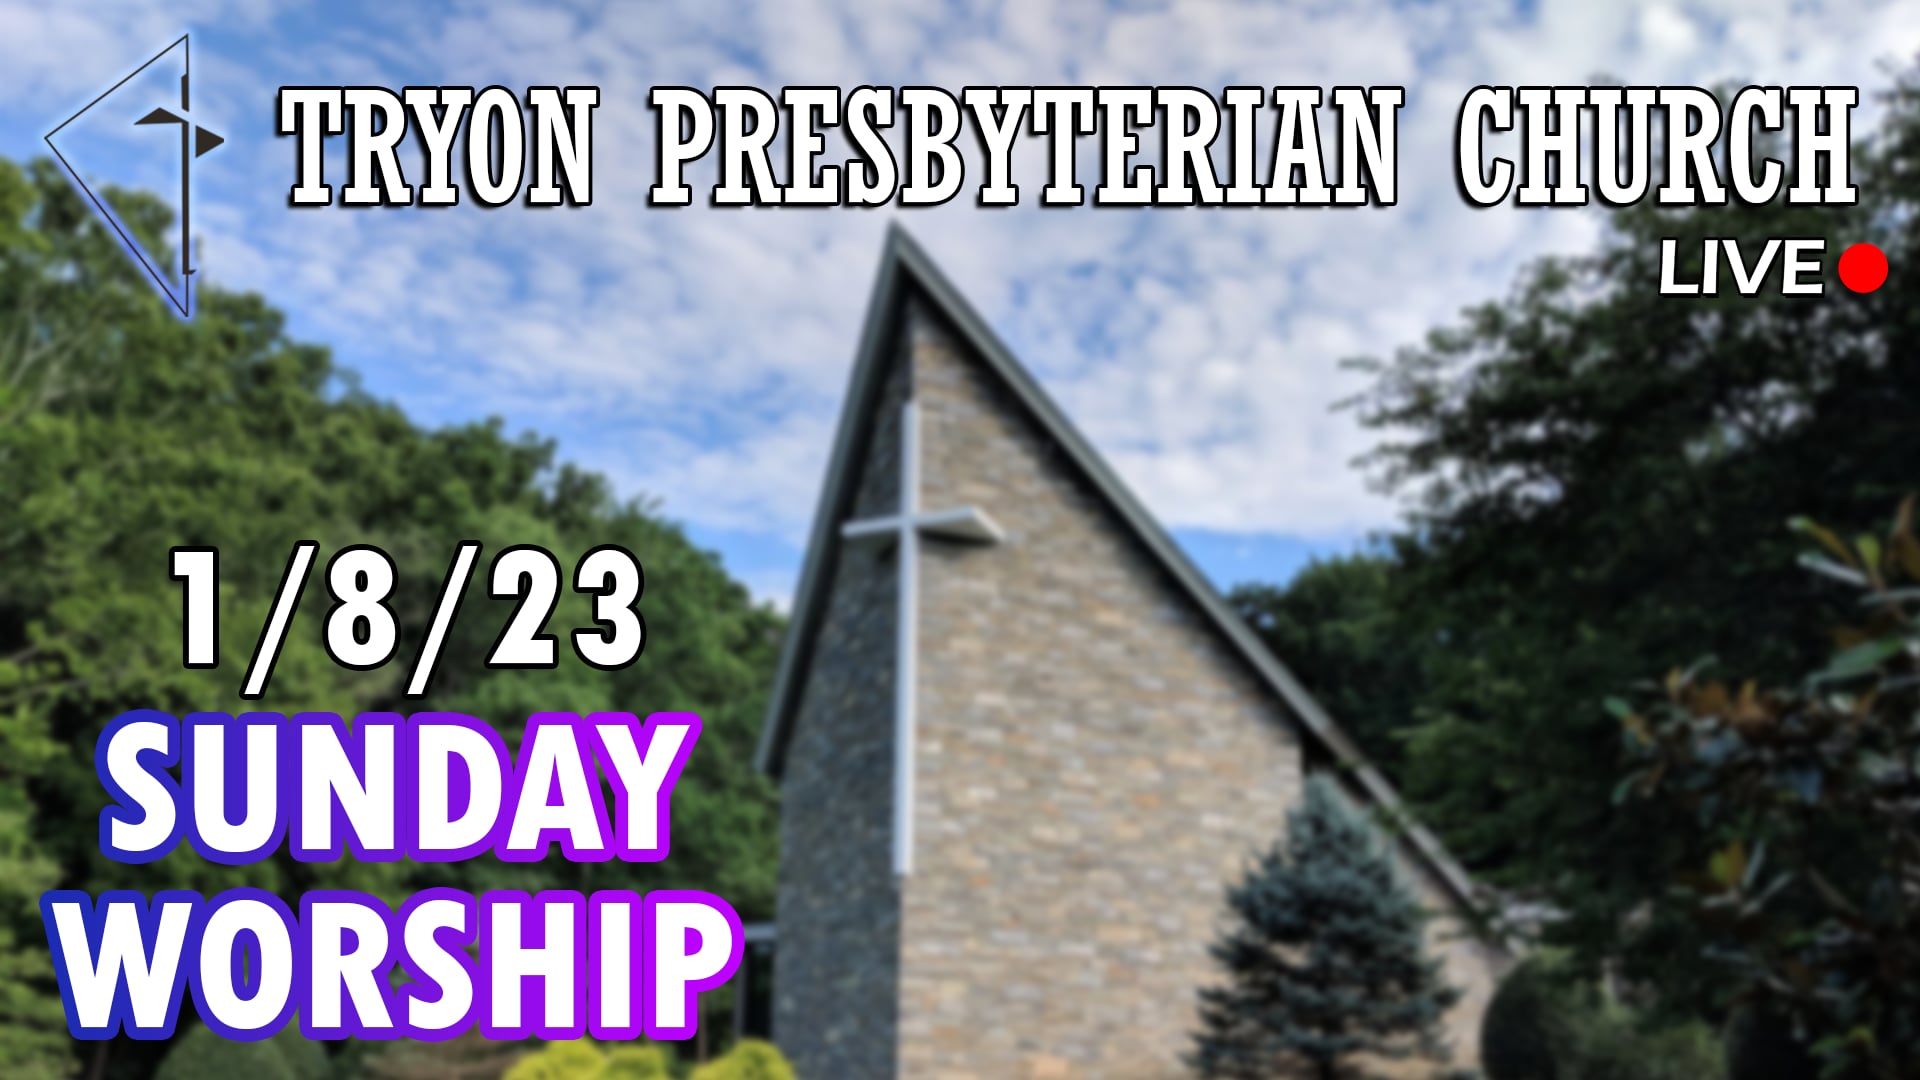 Tryon Presbyterian Church - Sunday Worship 1/8/23